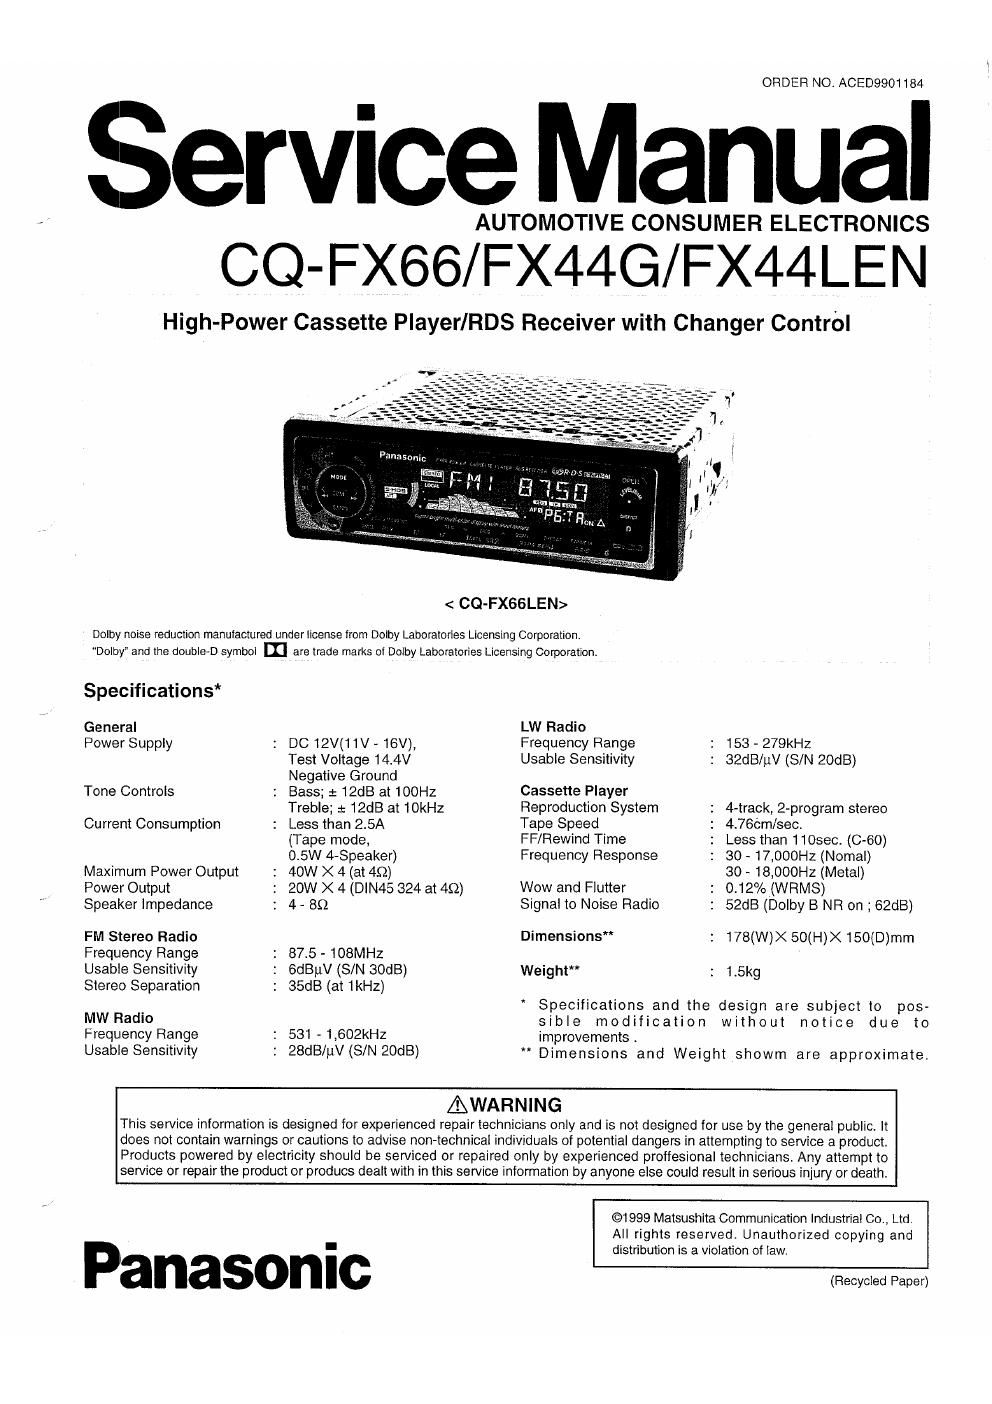 panasonic cq fx 44 g service manual